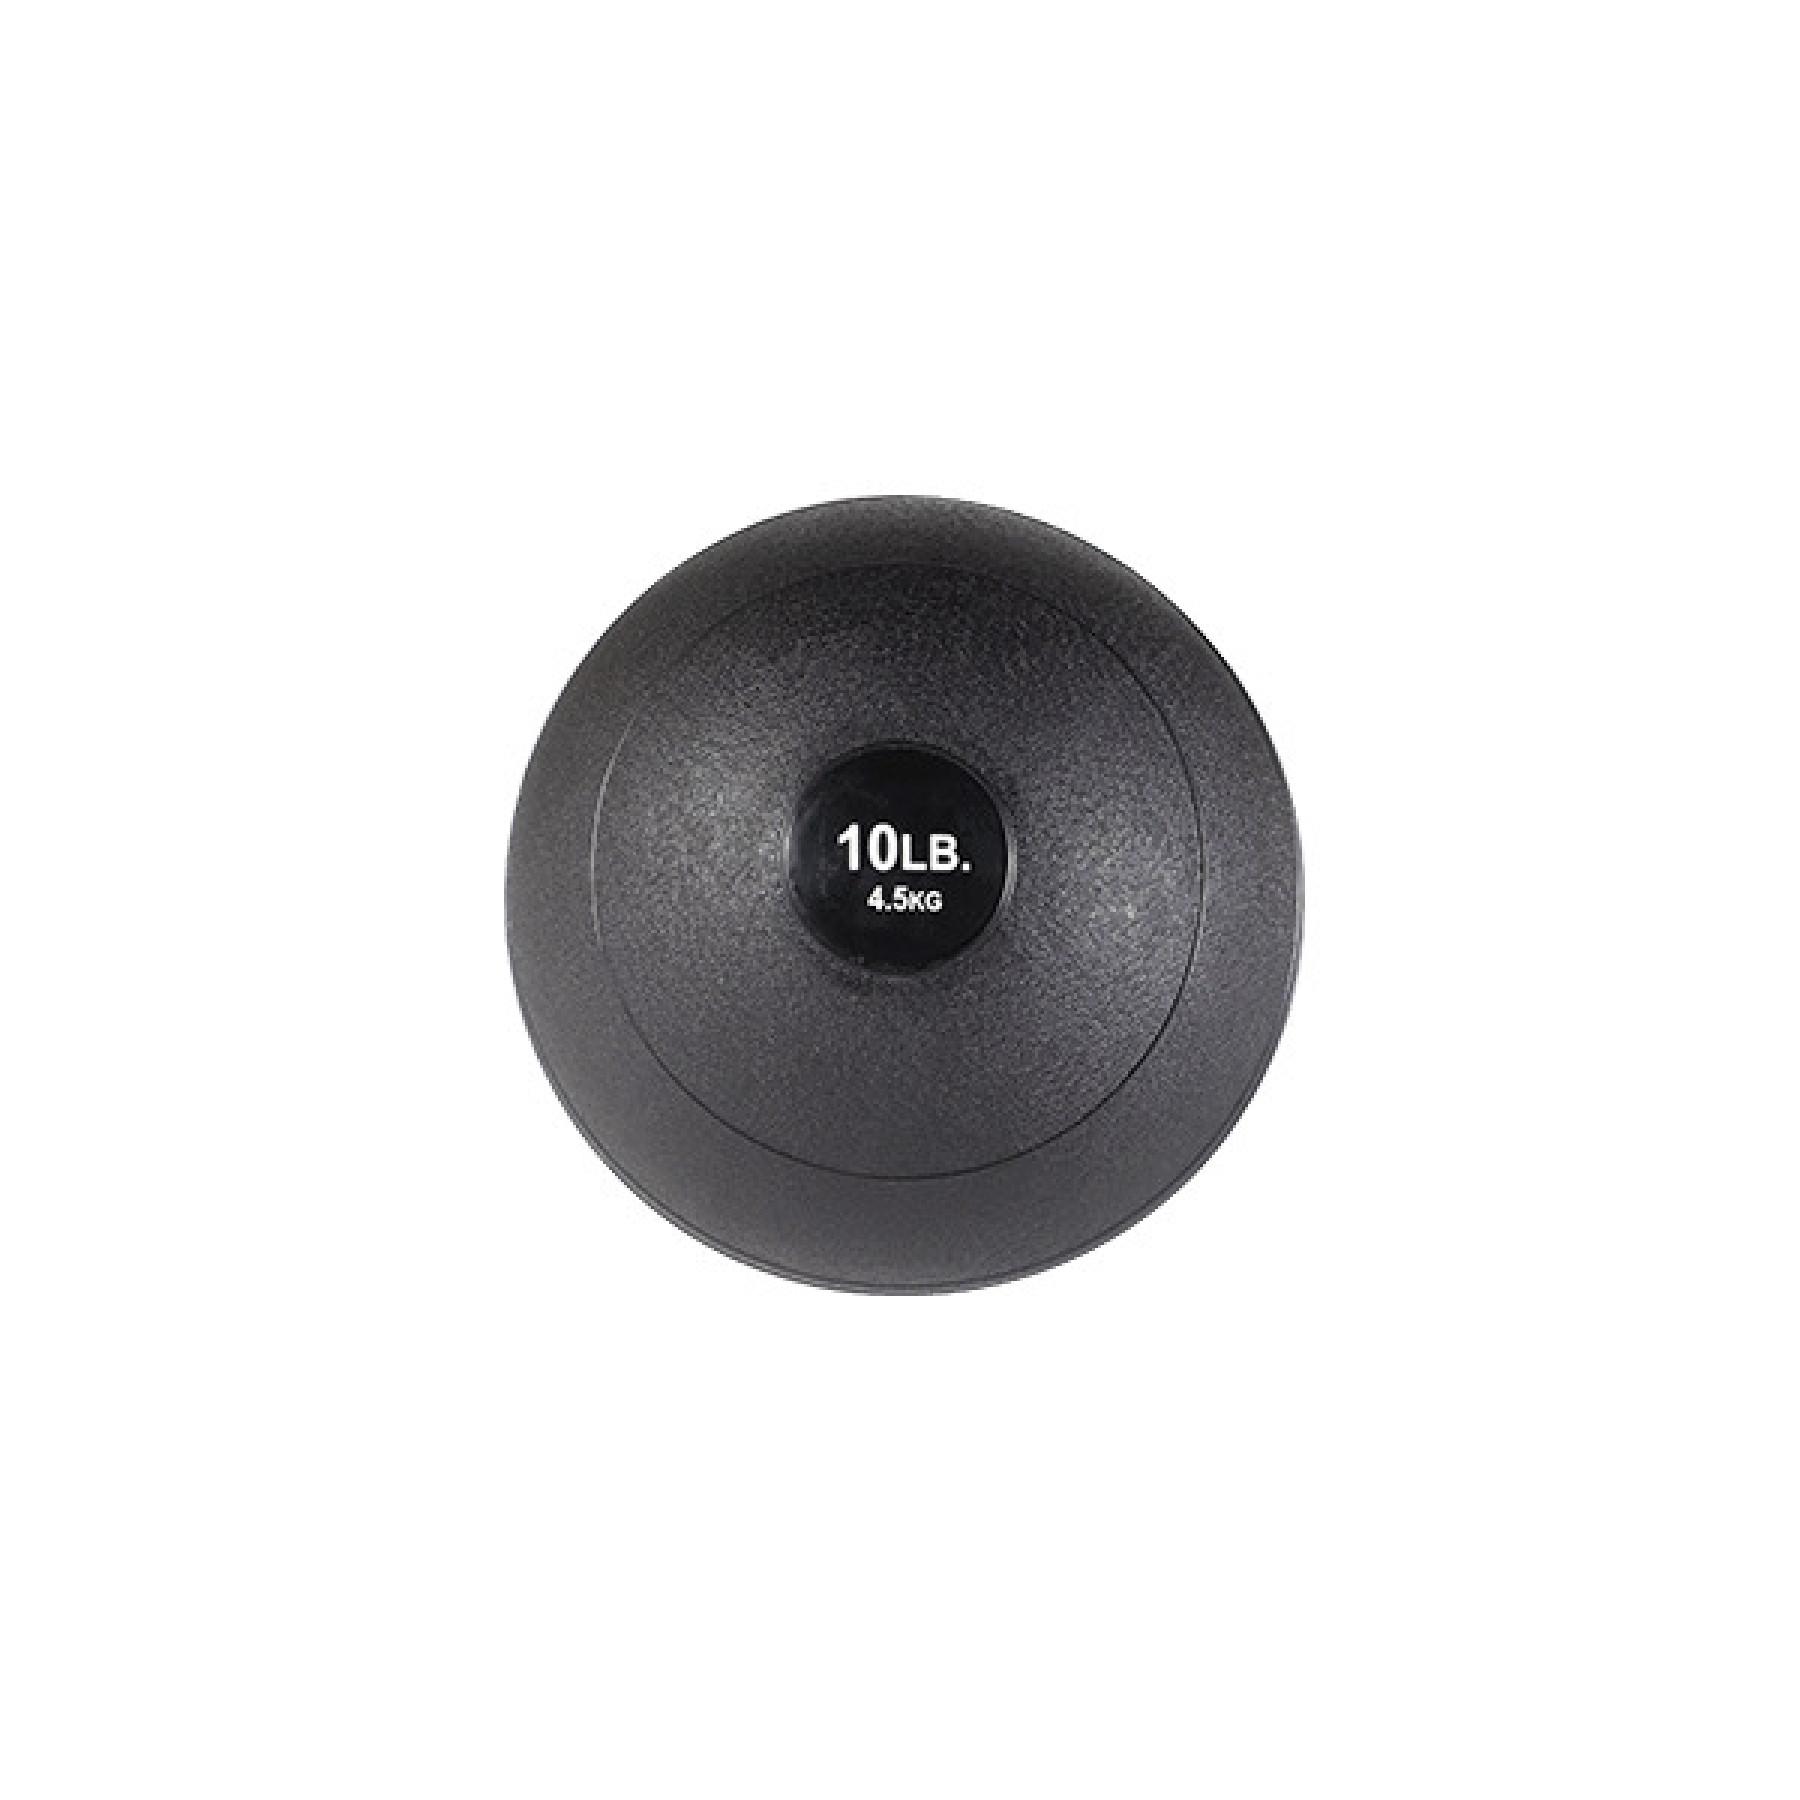 Slam ball 20 lbs - 9.7 kg Body Solid